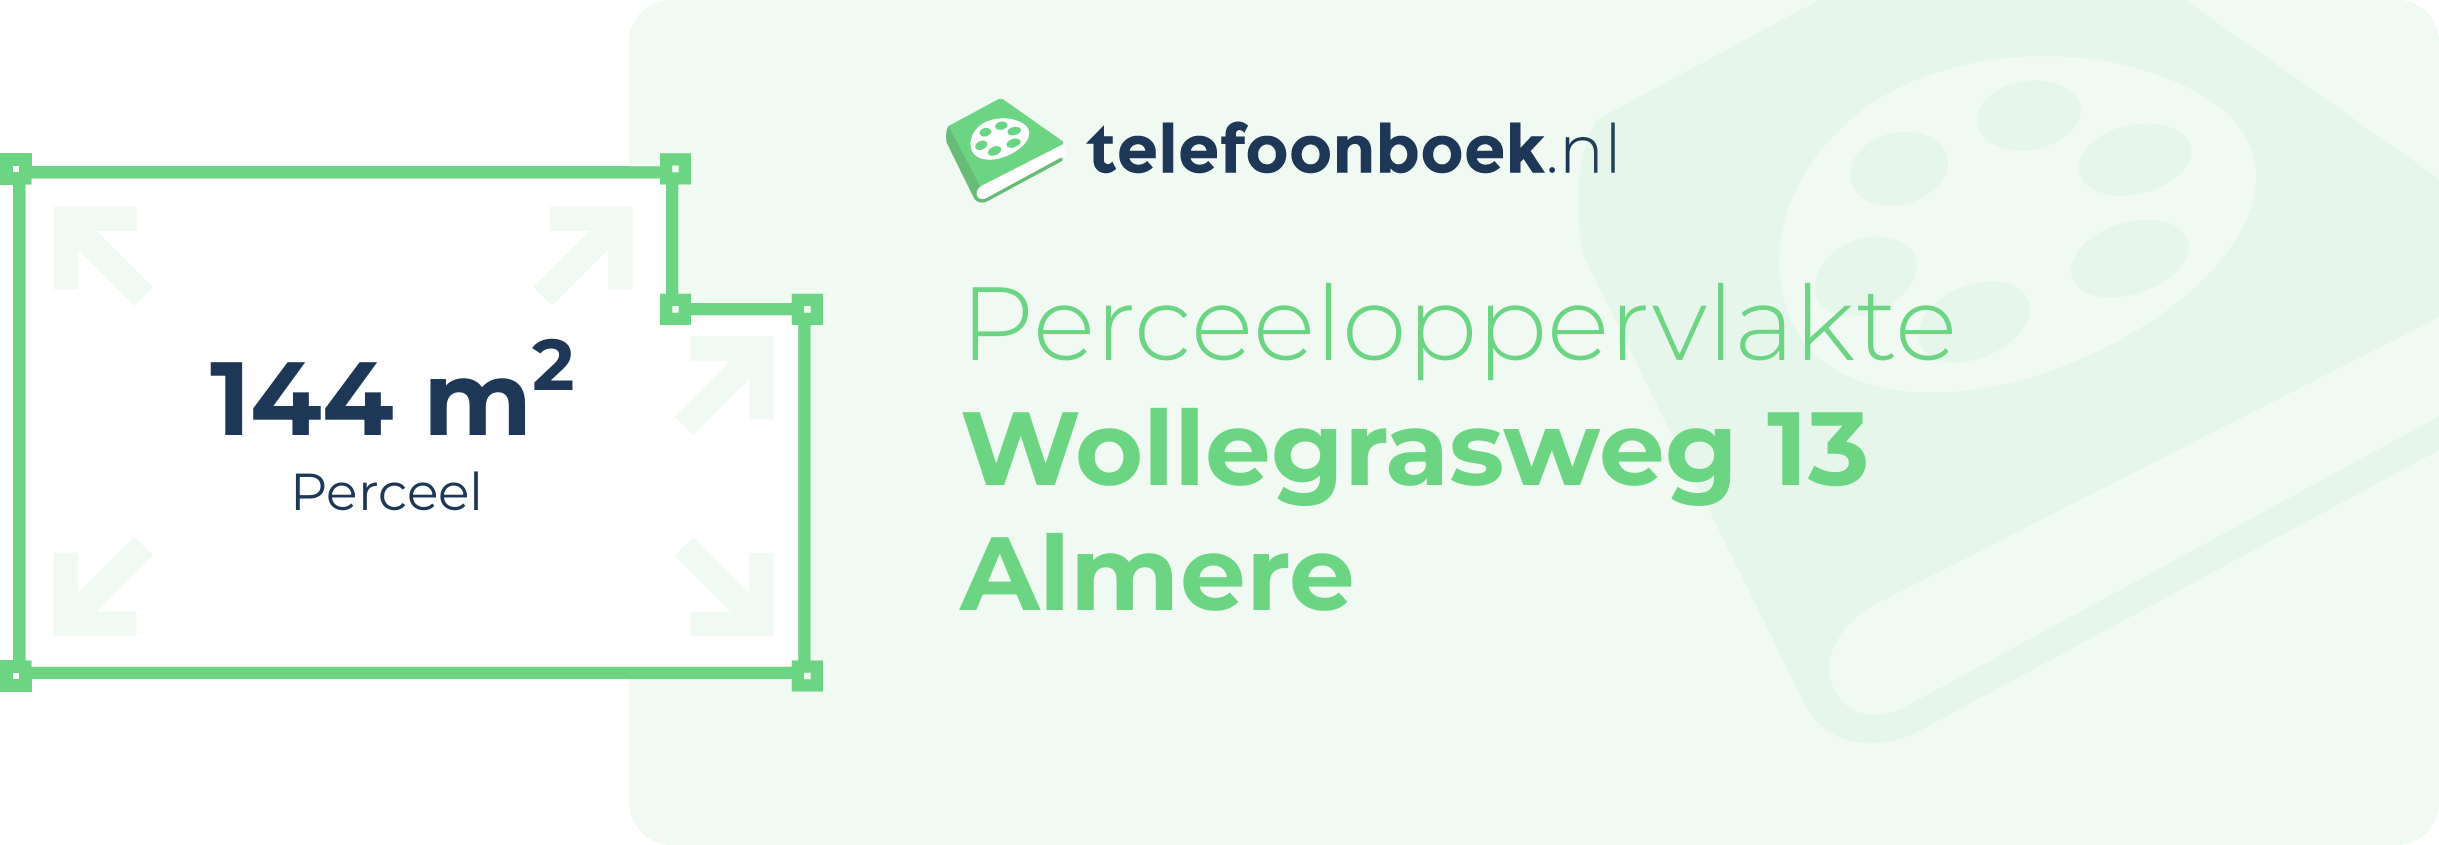 Perceeloppervlakte Wollegrasweg 13 Almere